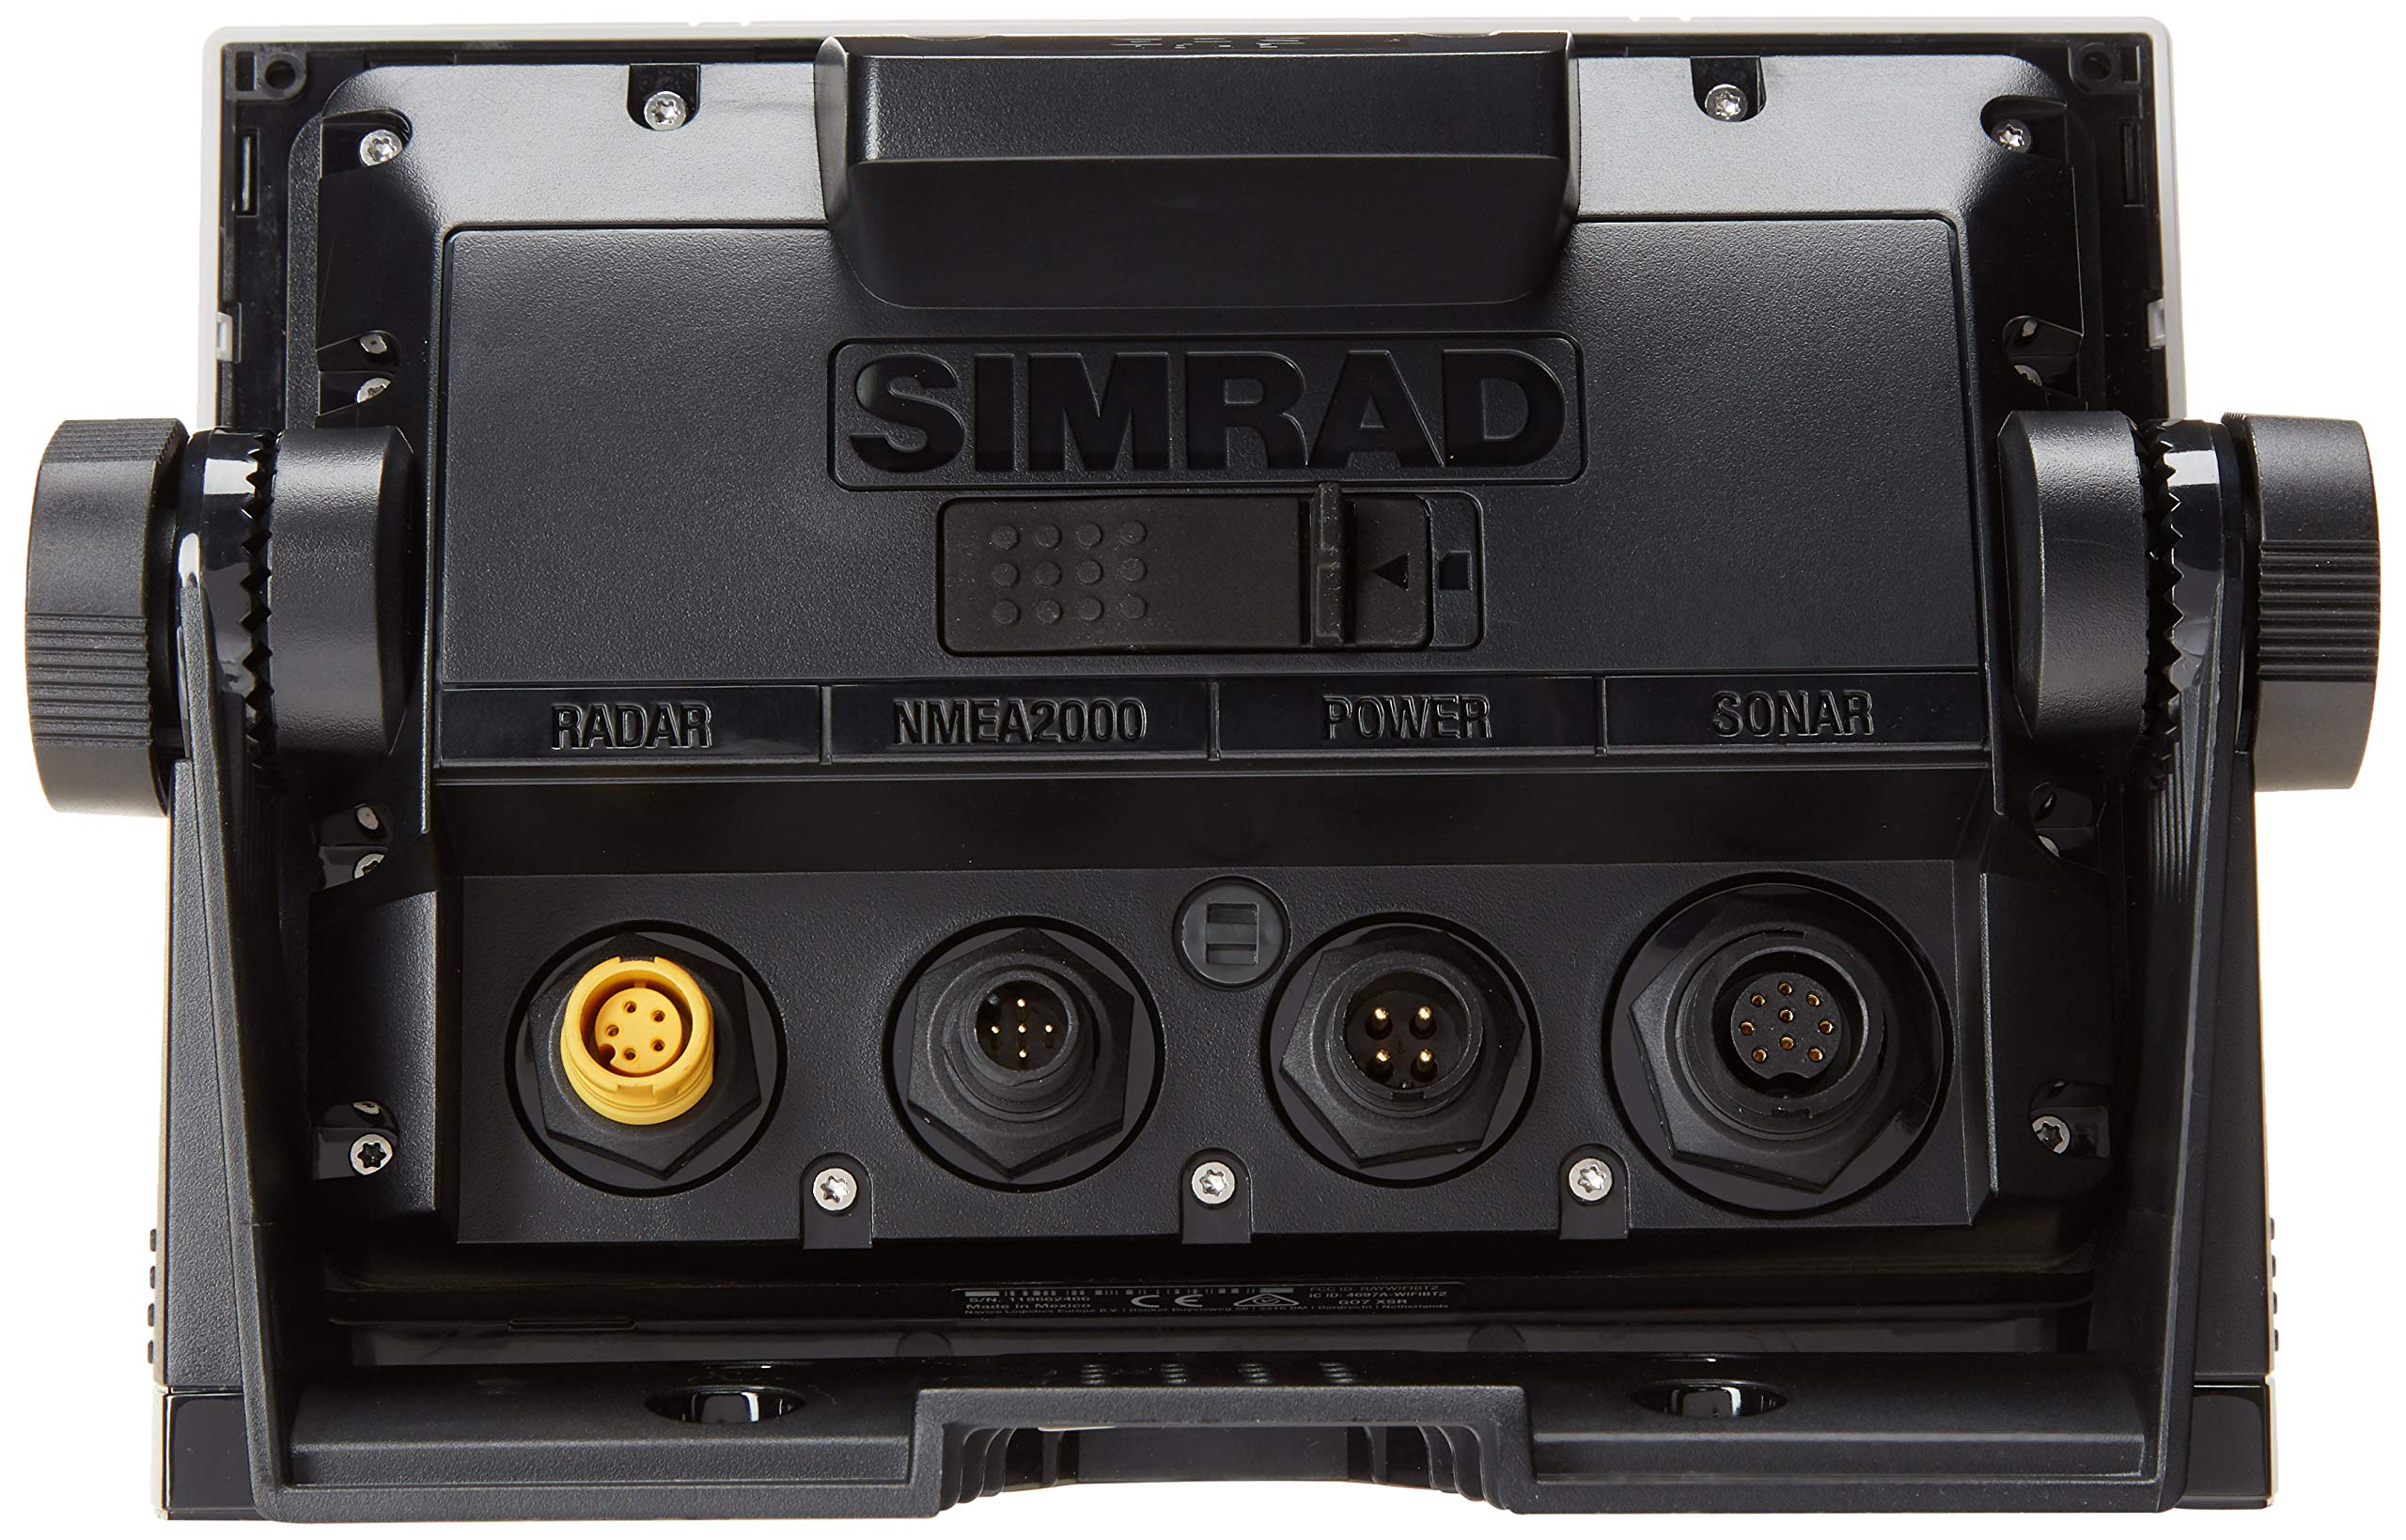 Simrad 000-14077-001 GO7 XSR Chartplotter/Fishfinder with Radar Display